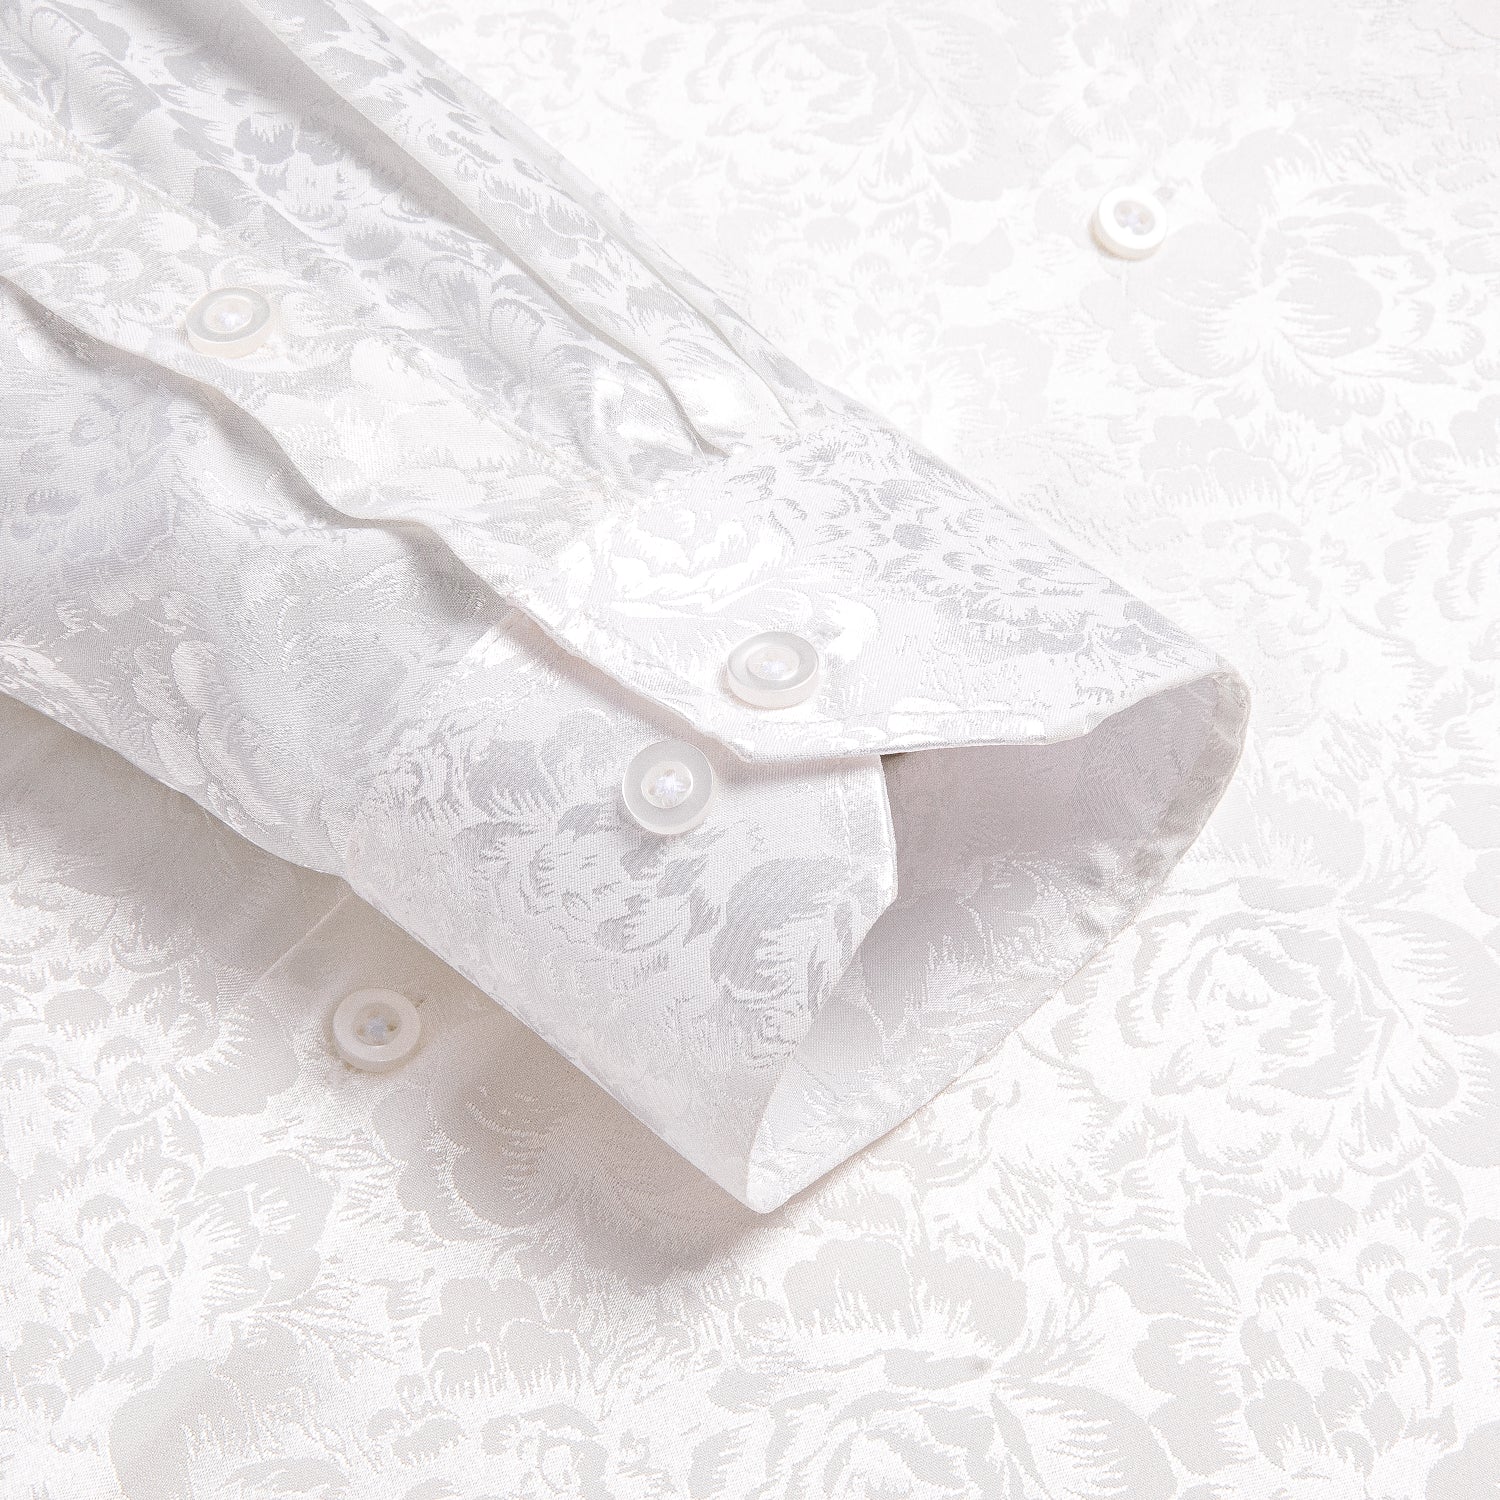 New White Floral Silk Men's Long Sleeve Shirt